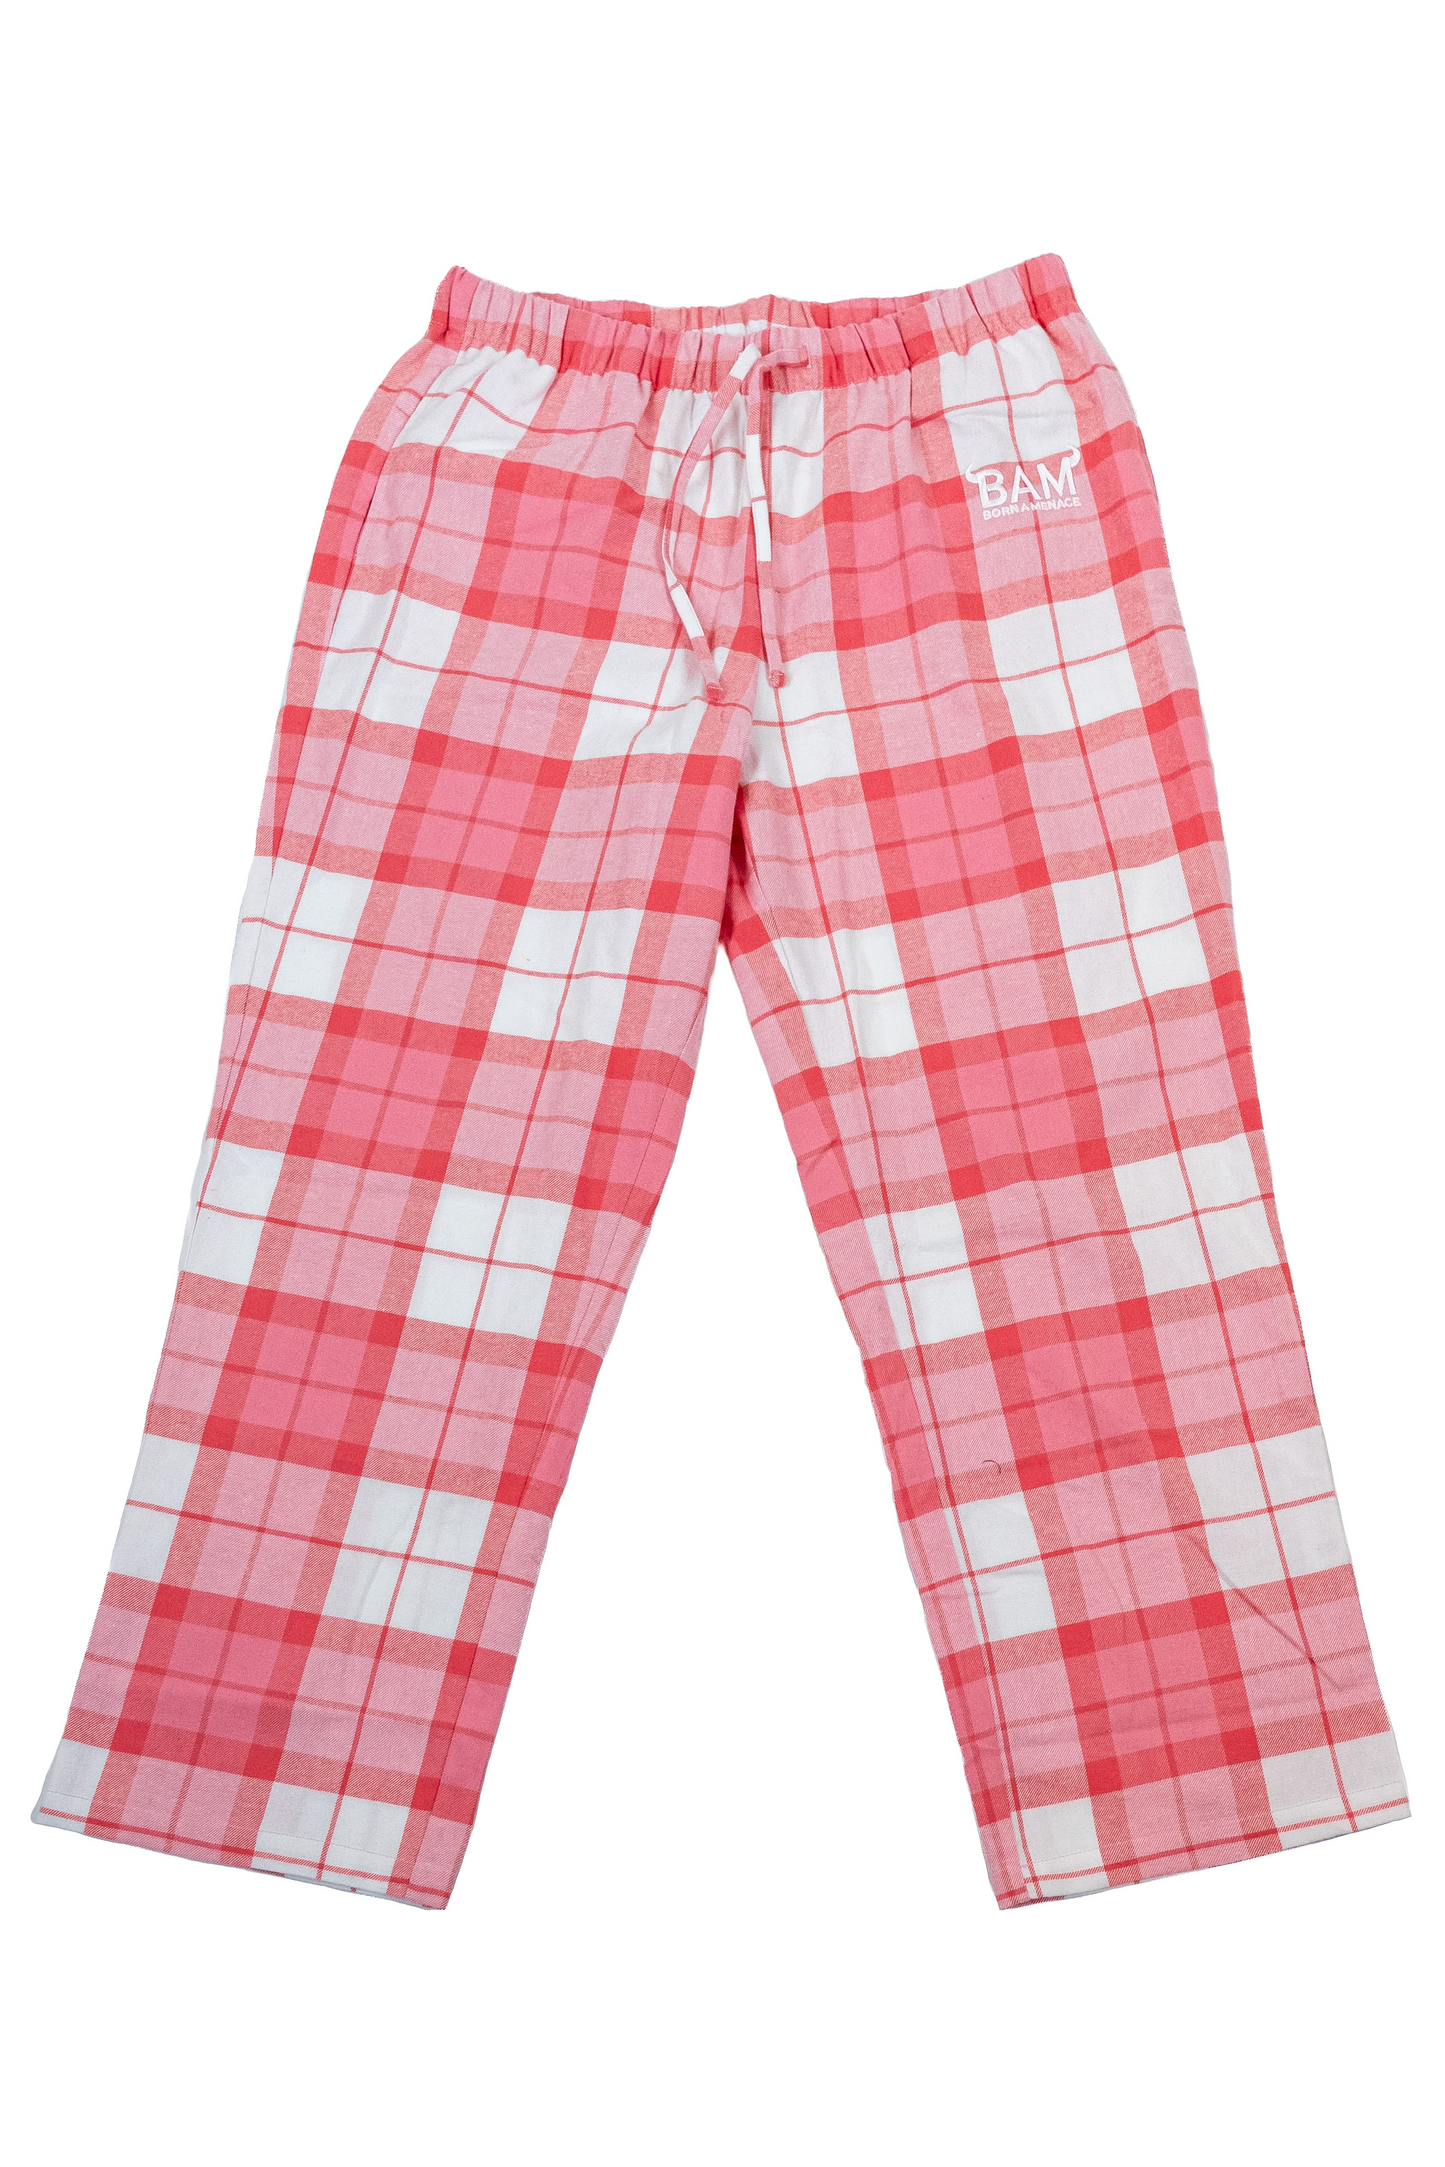 Born A Menace Pink/White Pajamas